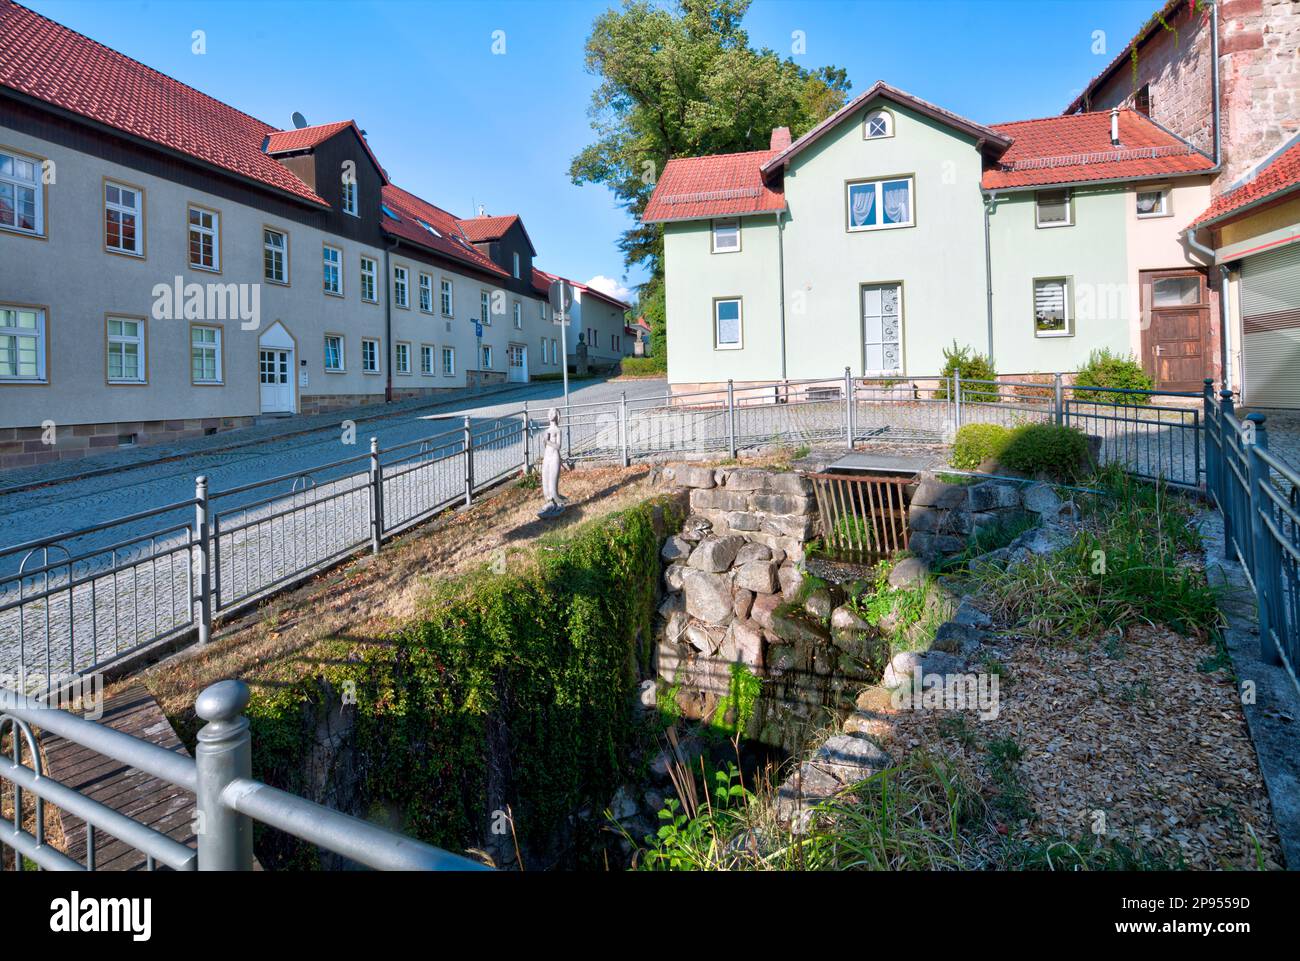 Cascada, foso, fachada de la casa, arquitectura, vista del pueblo, Verano, Schleusingen, Turingia, Alemania, Europa, Foto de stock